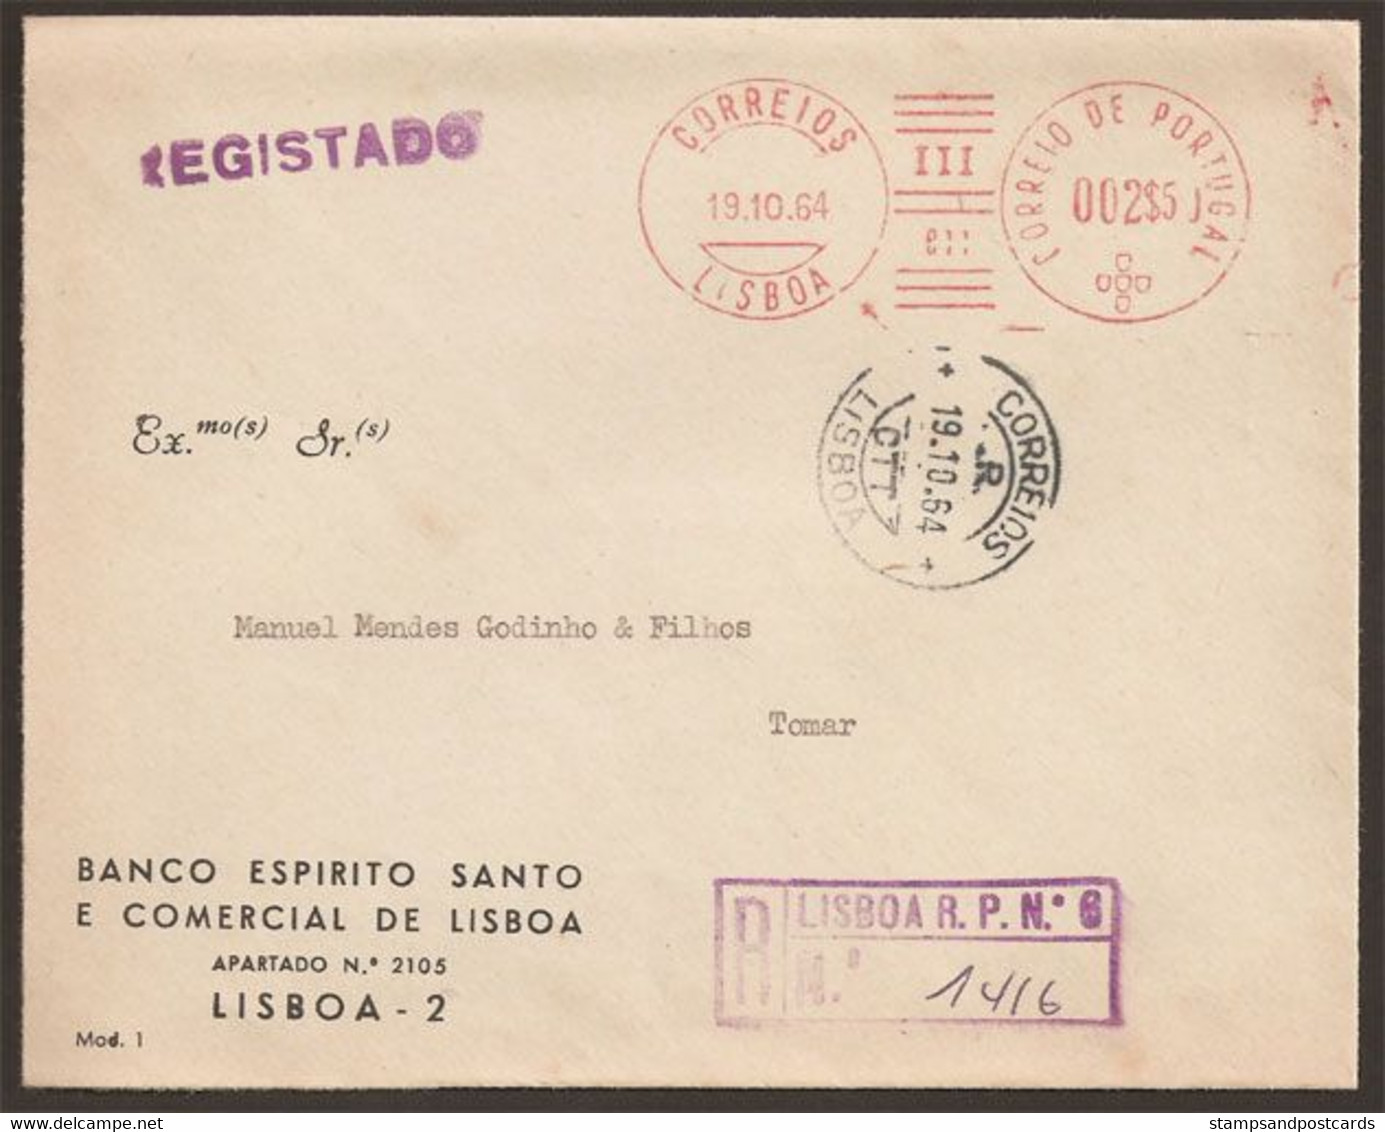 Portugal EMA Cachet Rouge Banque BESCL 1964 Recommandée Privé Nº 6 Meter Stamp BESCL Bank Private Registration Nº 6 - Frankeermachines (EMA)